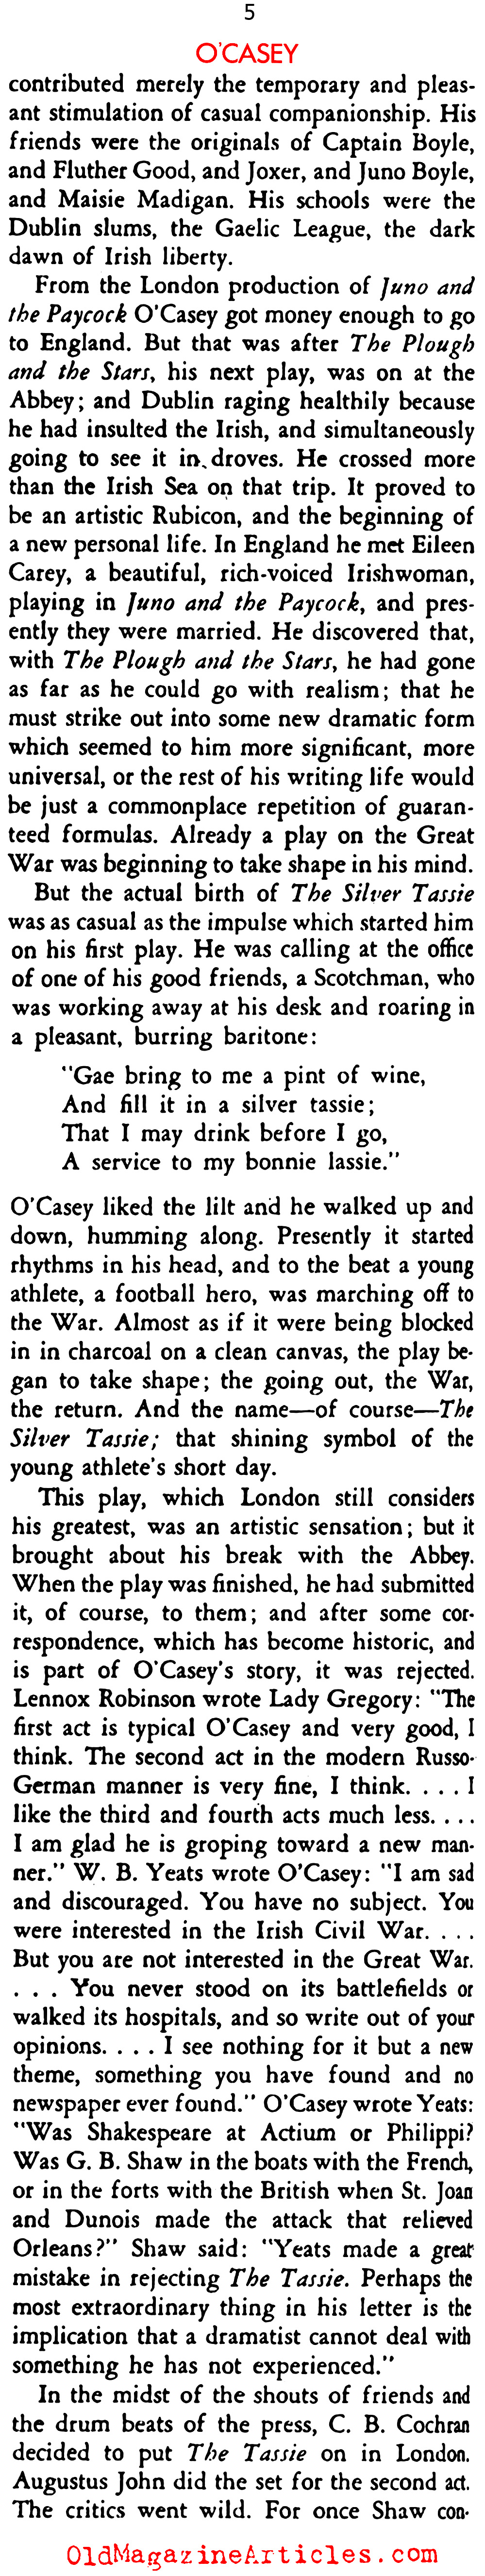 Sean O'Casey: Laborer, Playwright, Poet (Stage Magazine, 1934)